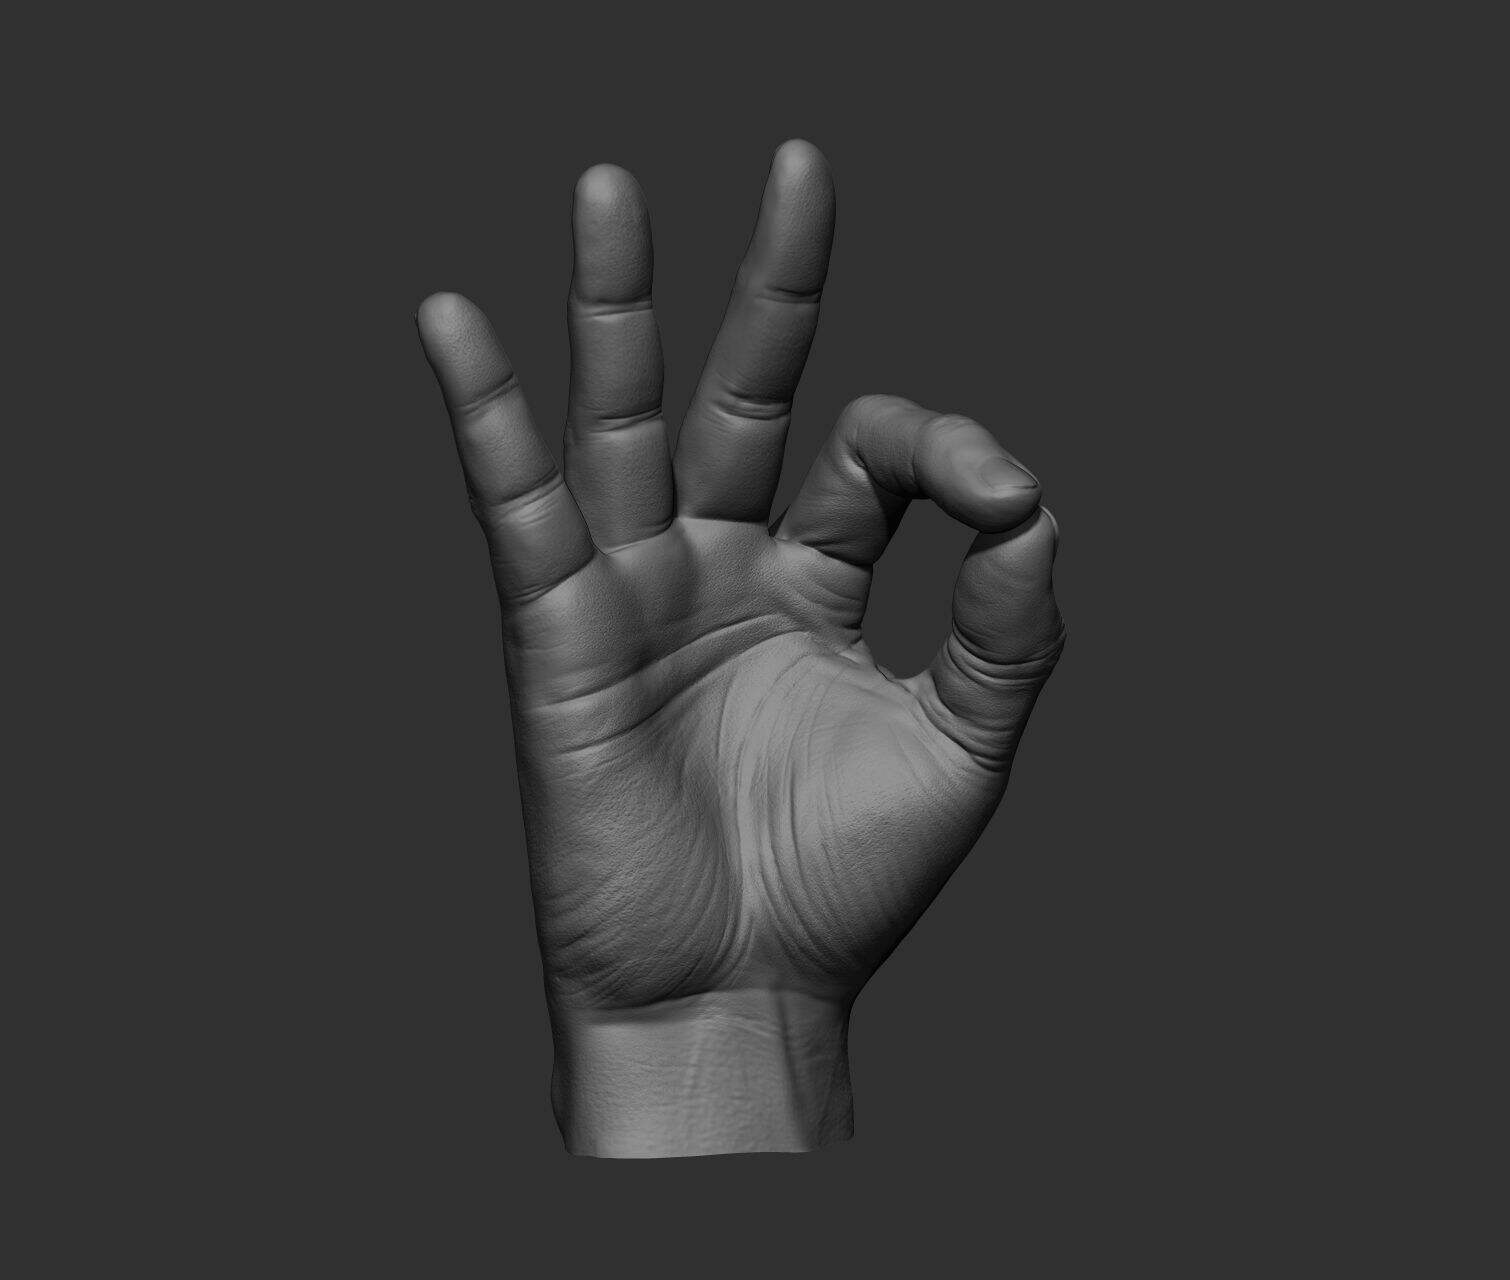 Hand Pose - Gripping - Shoulder/Arm by Melyssah6-Stock on DeviantArt